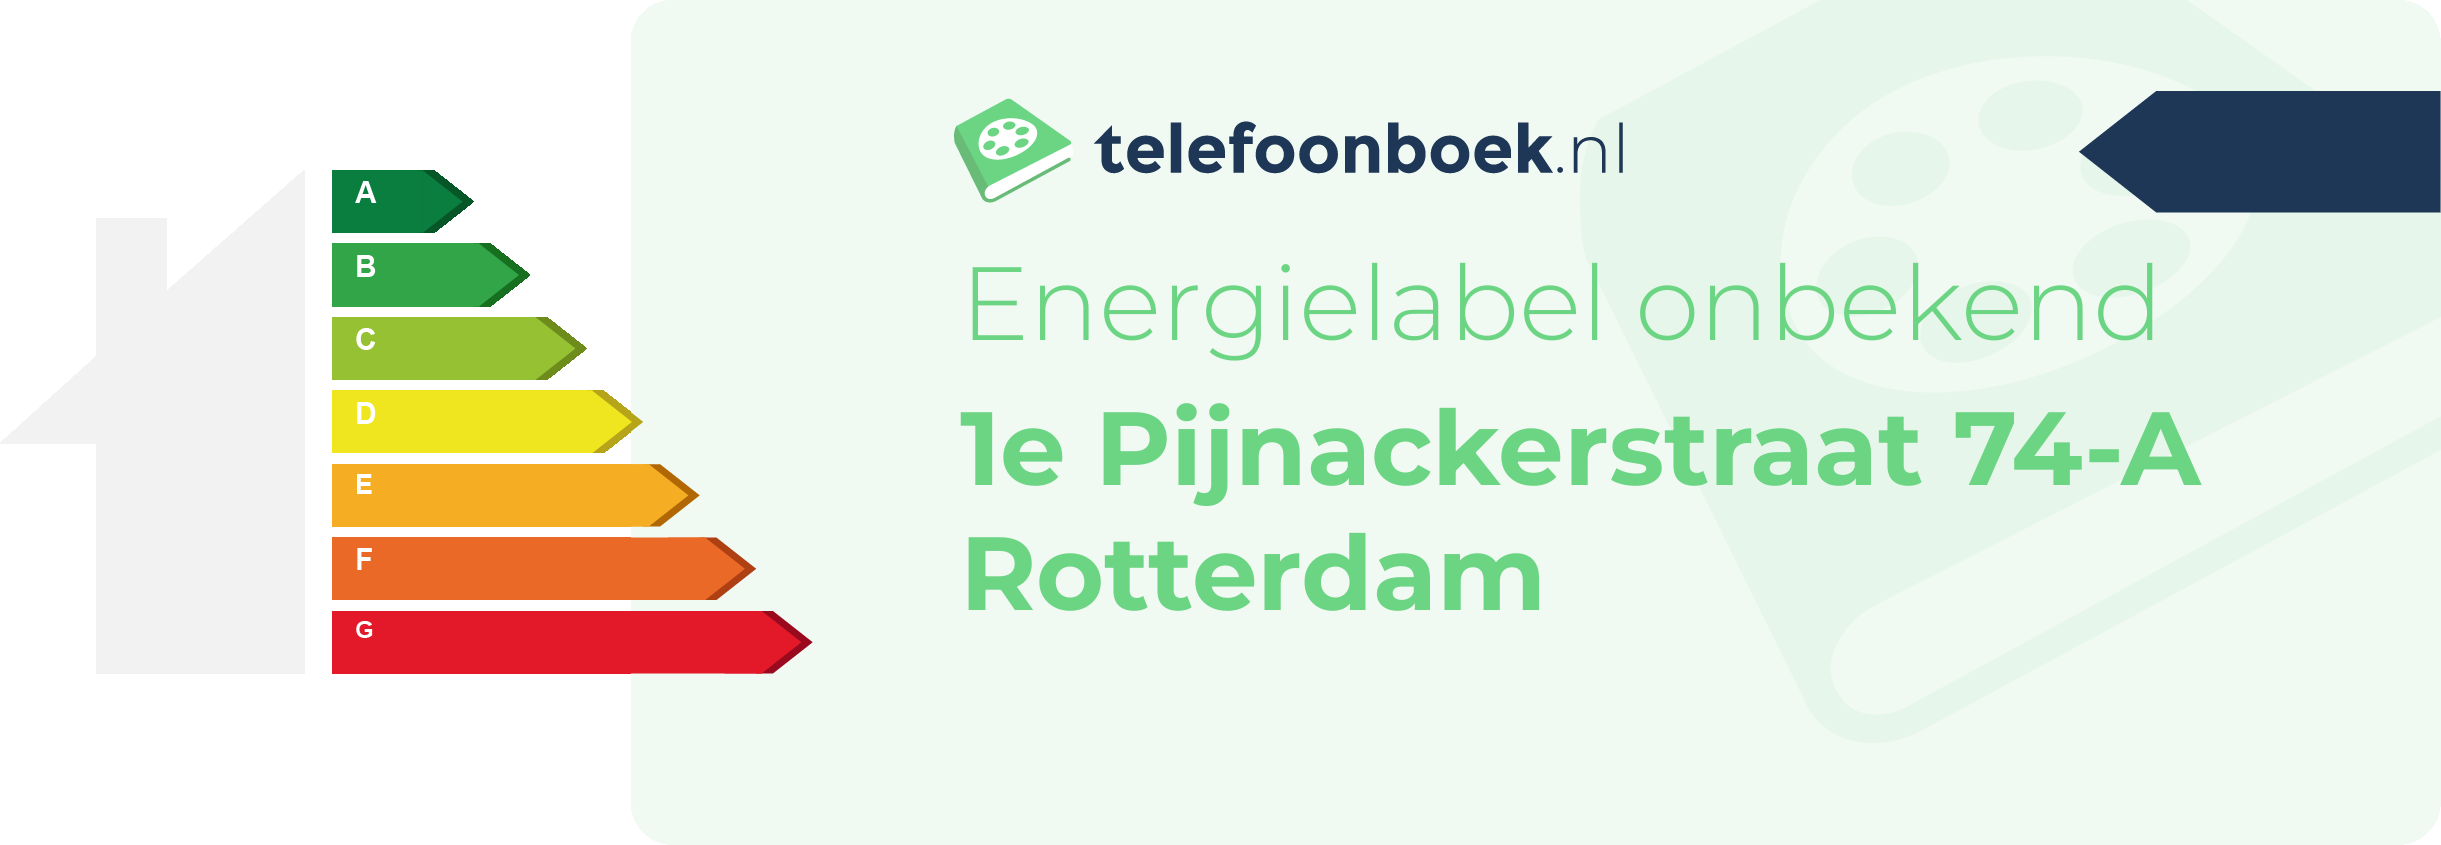 Energielabel 1e Pijnackerstraat 74-A Rotterdam